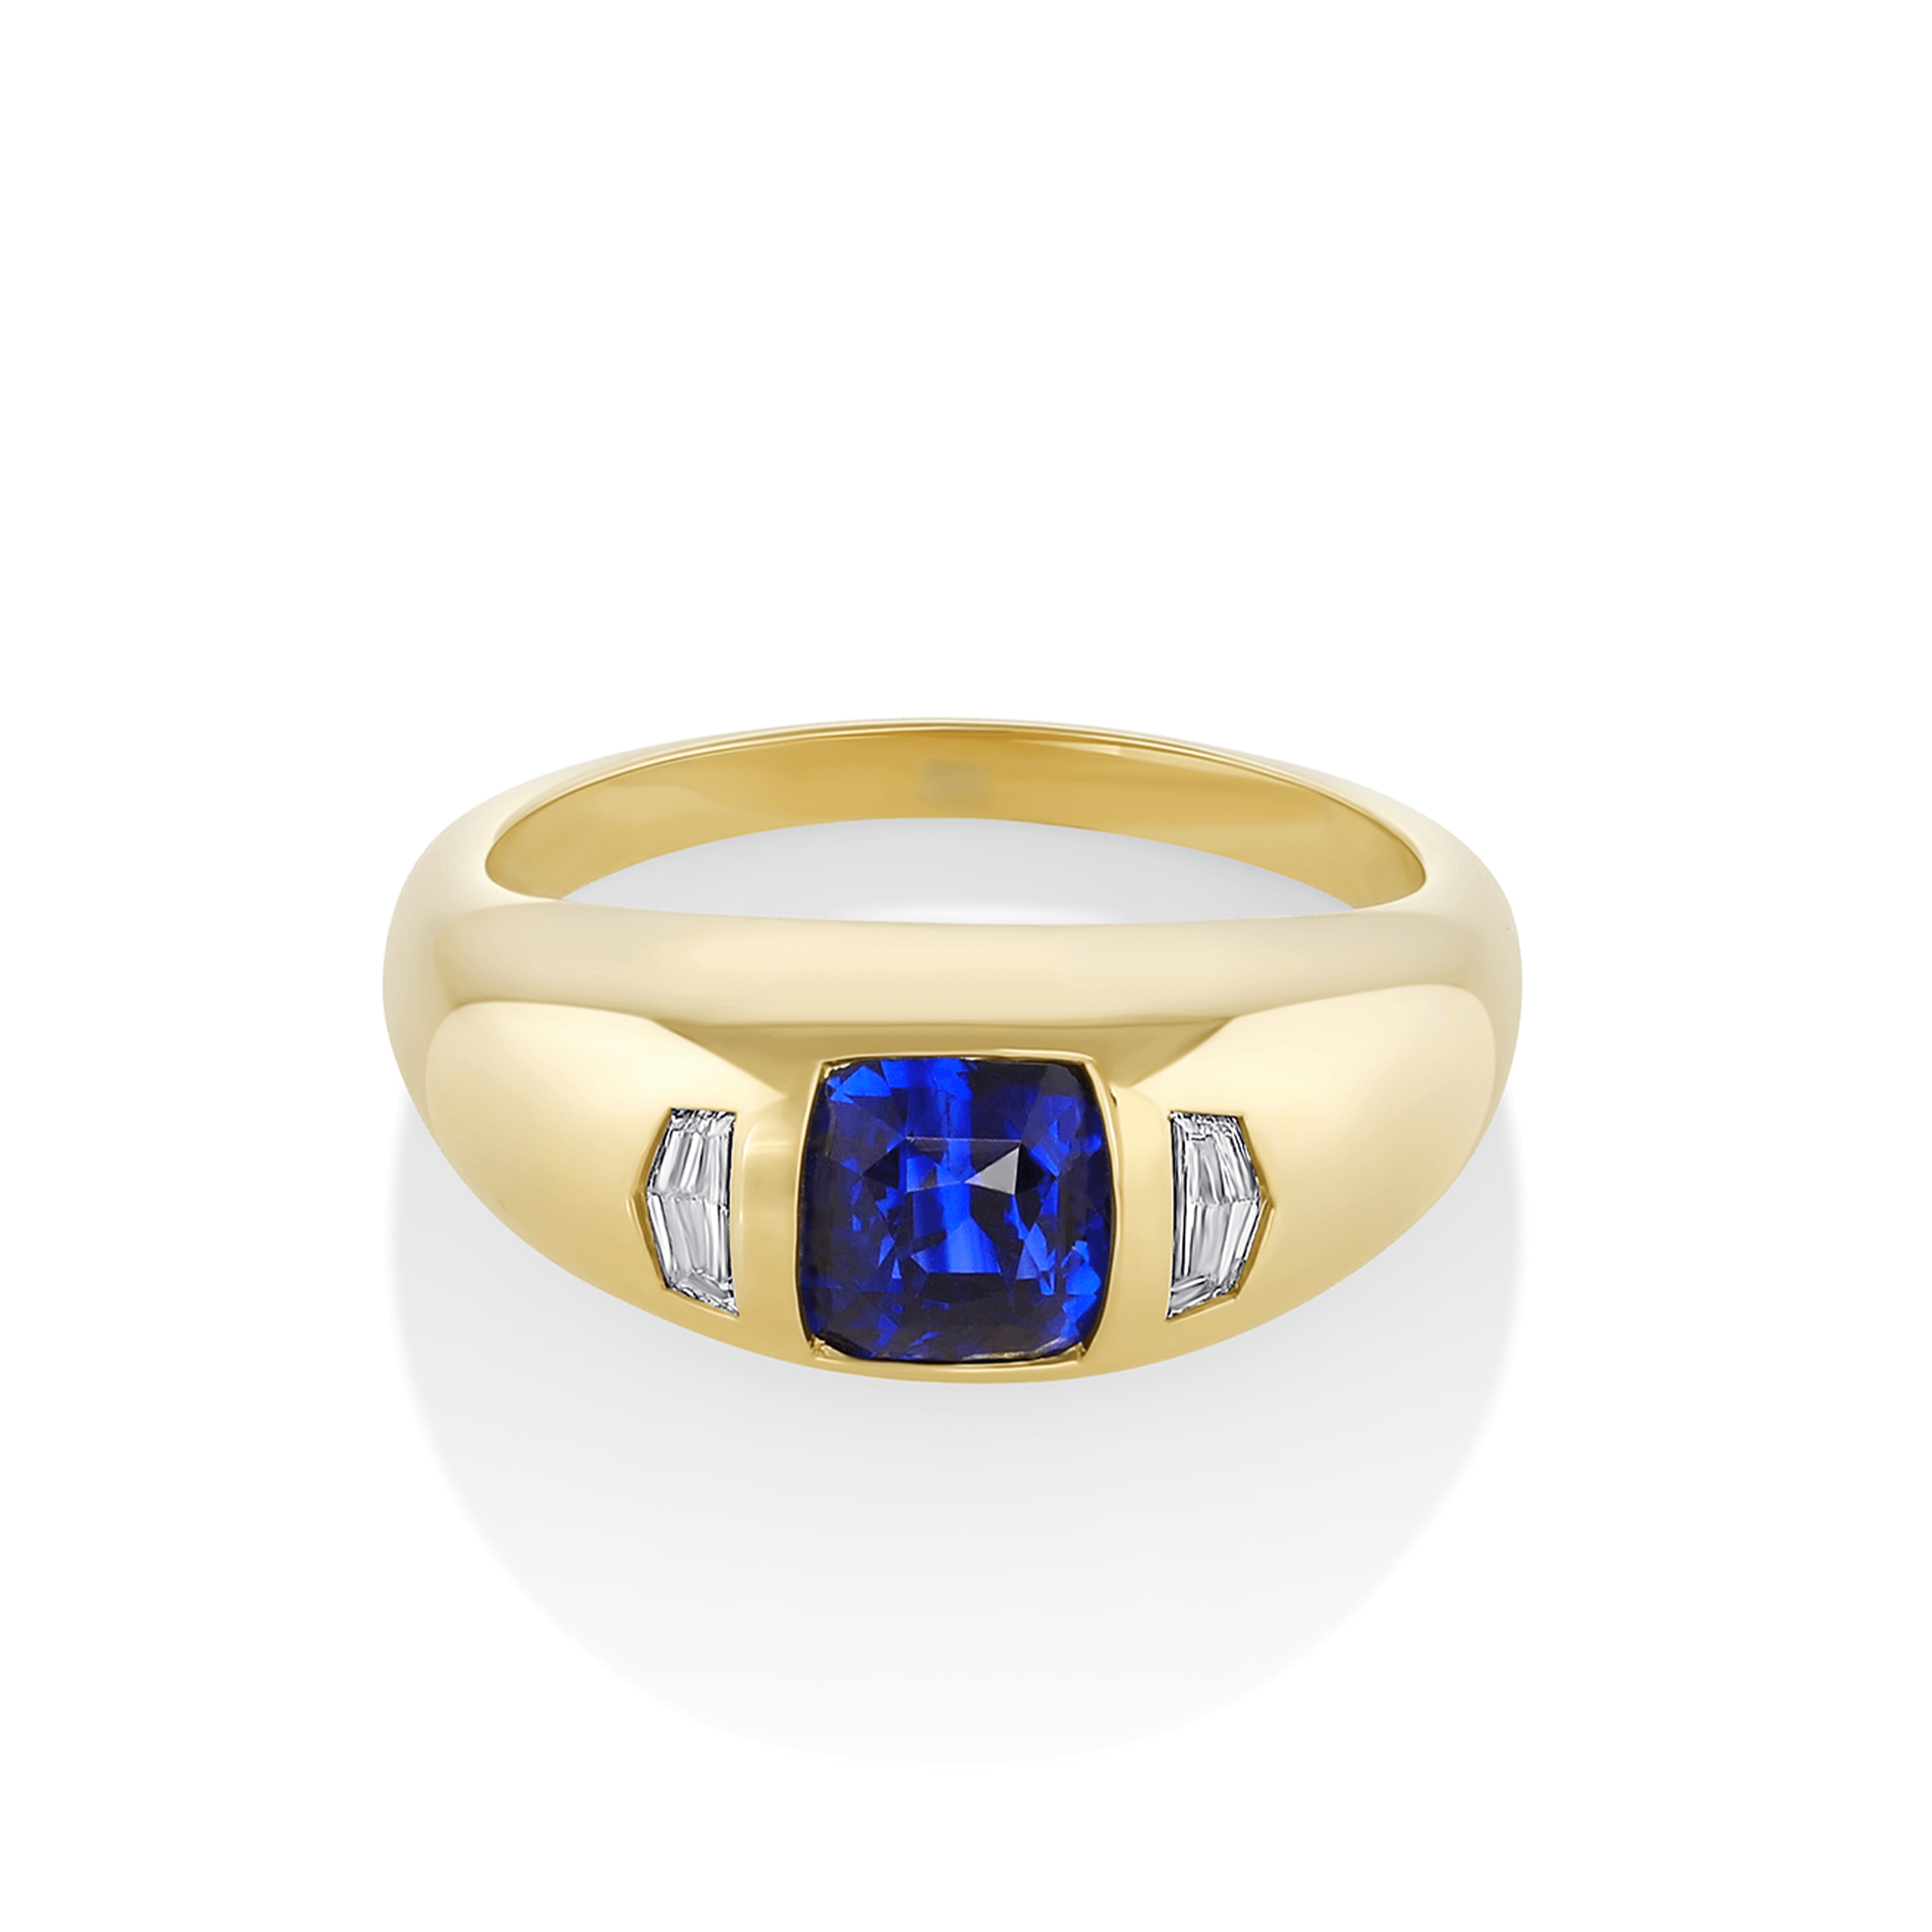 The Erudite Blue Sapphire Gold Ring